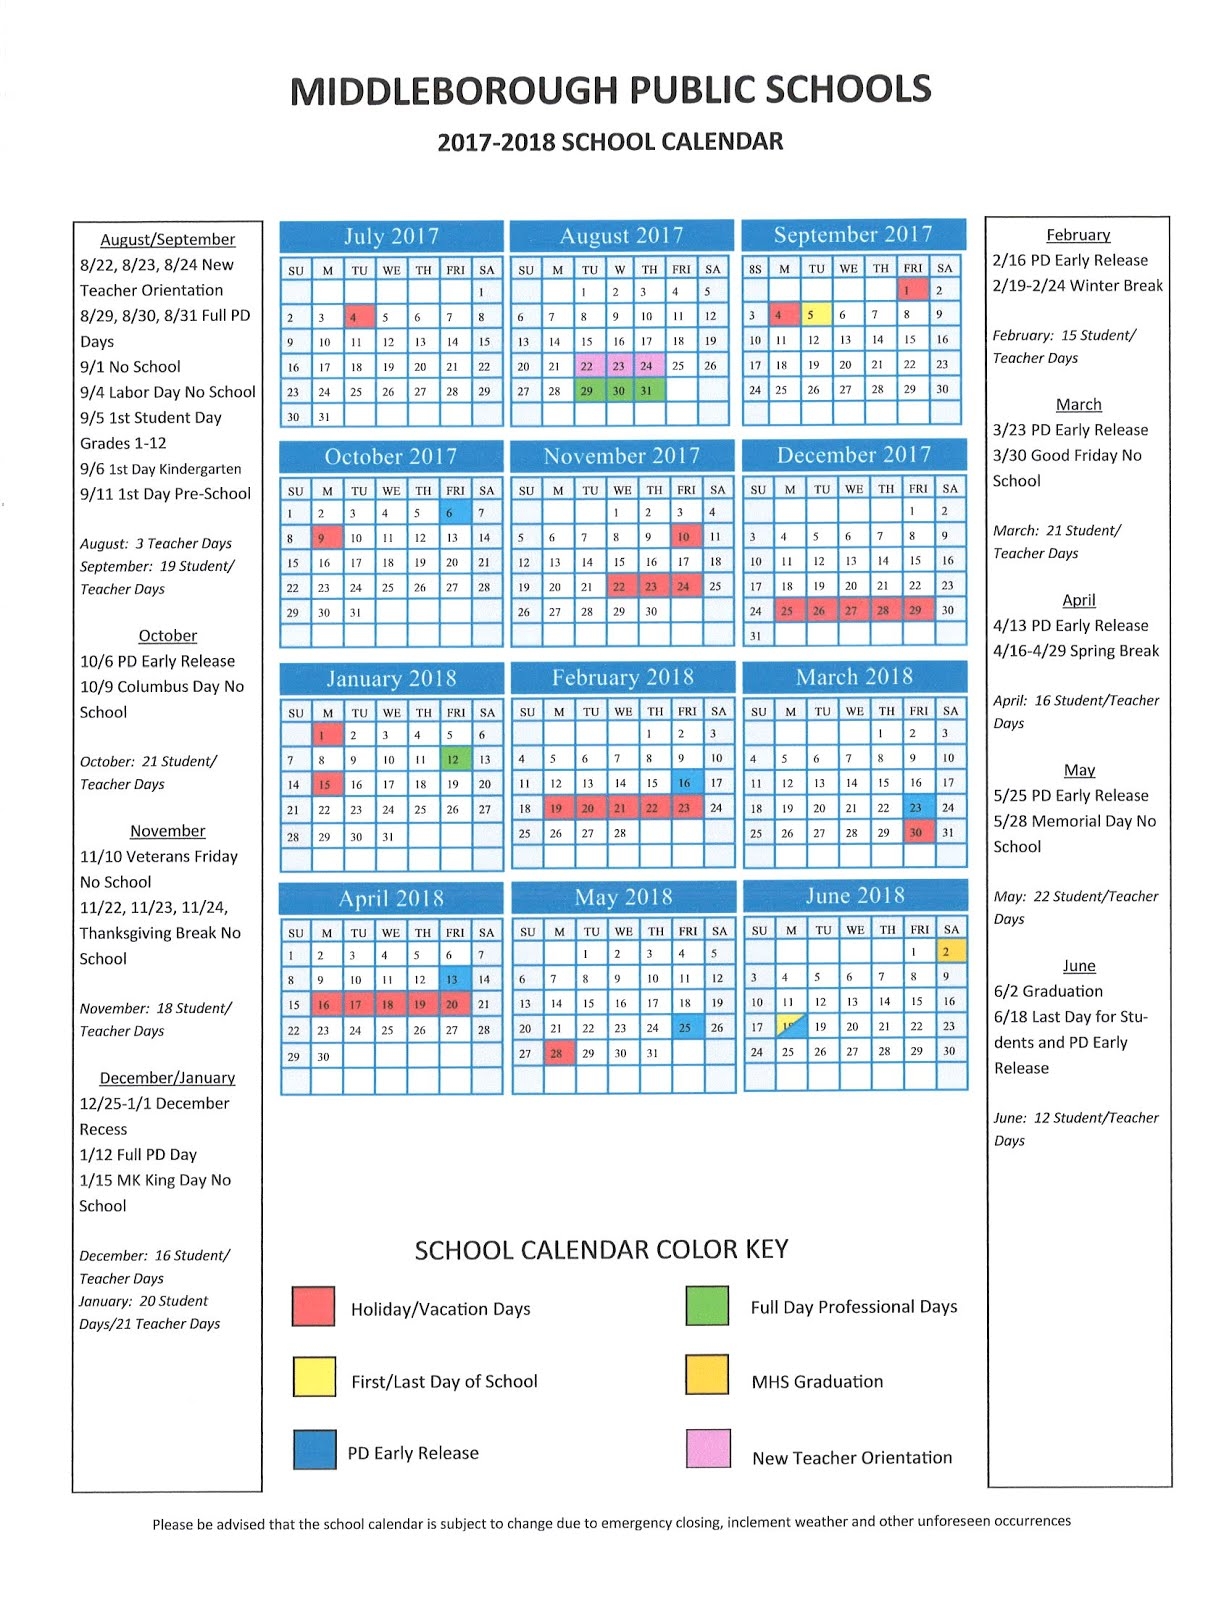 Mps School Calendar | Qualads